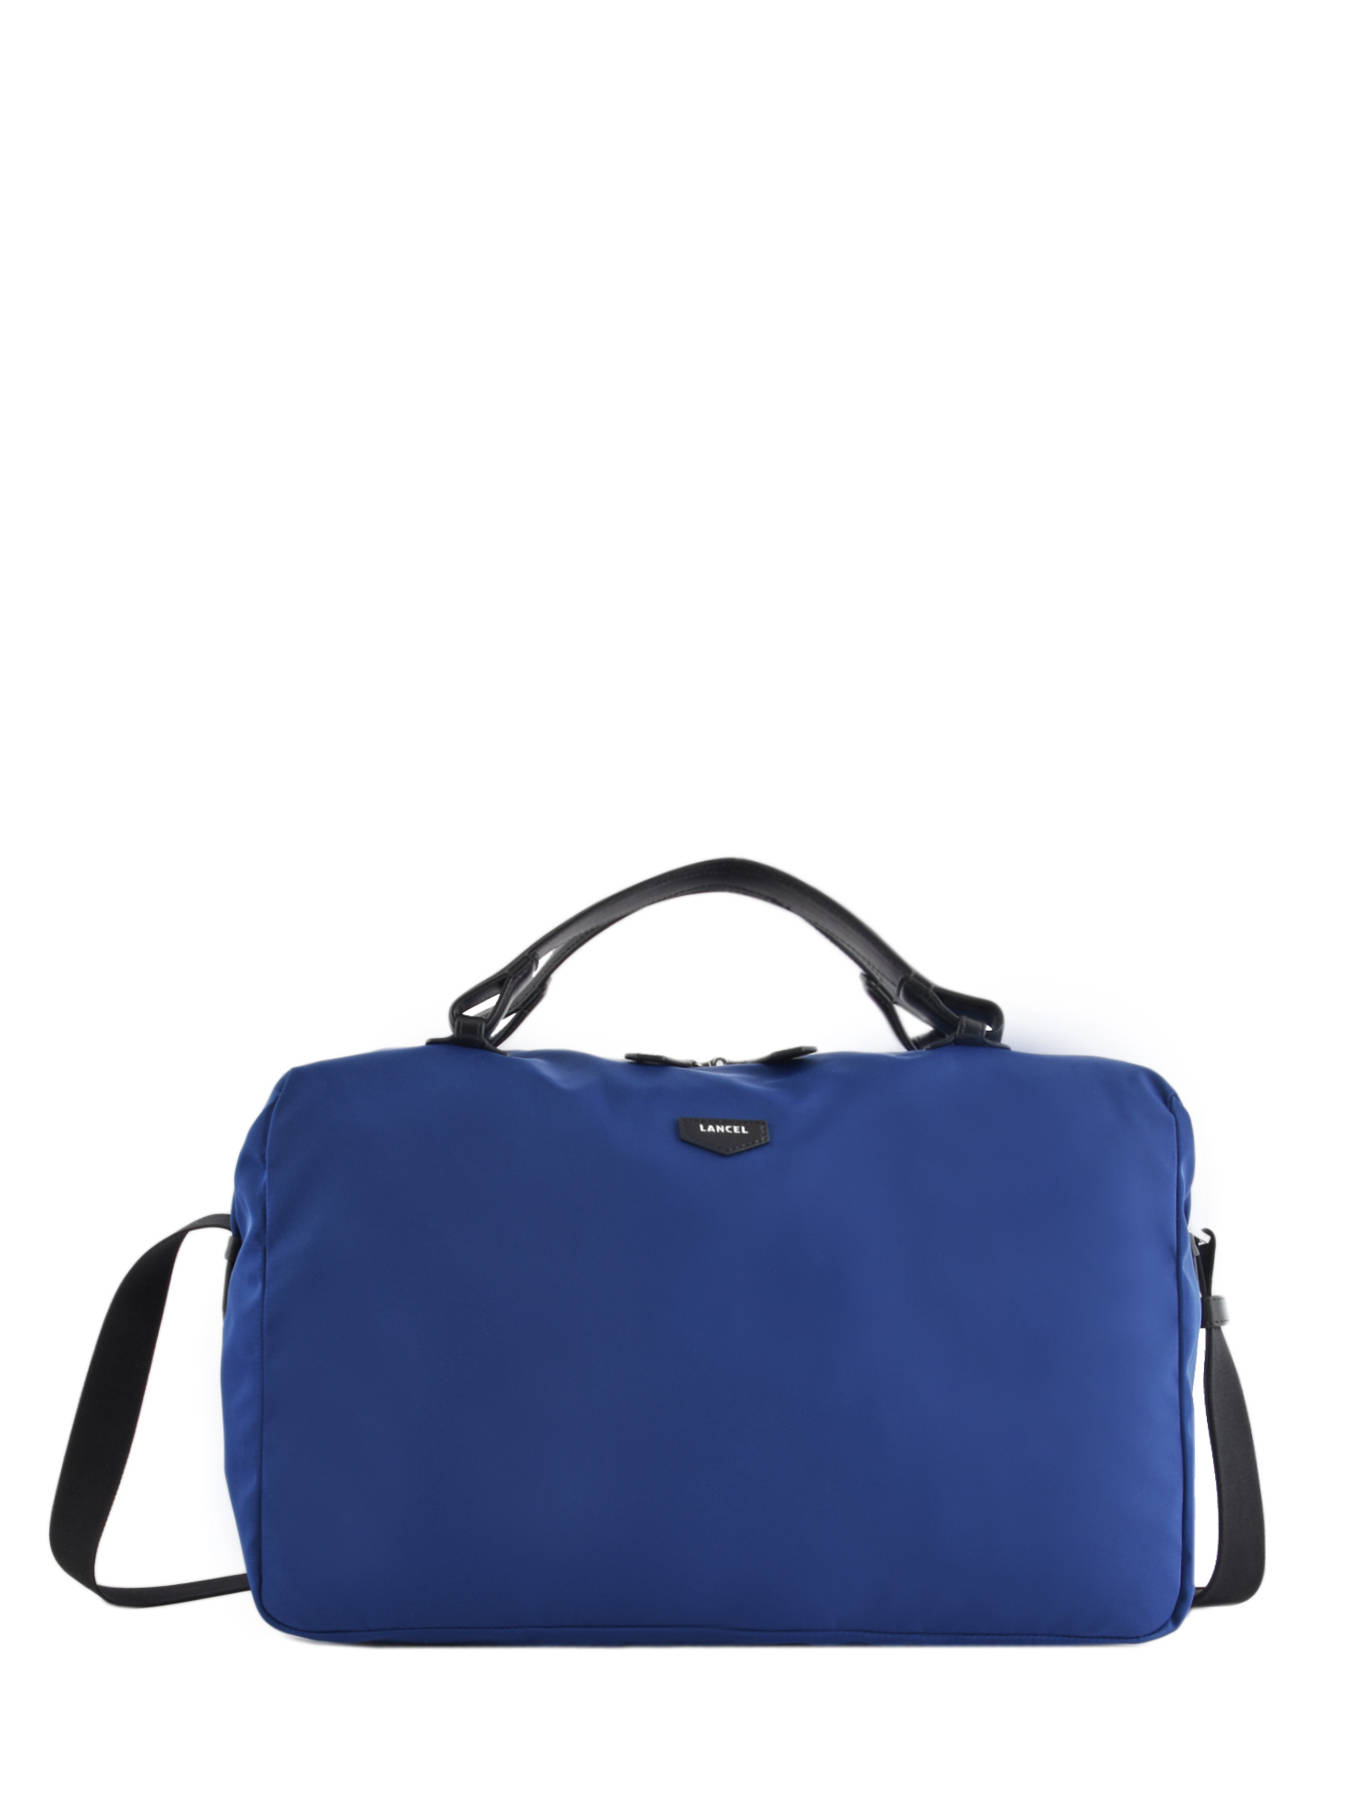 Lancel Carry on travel bag WEEKEND BAG - best prices